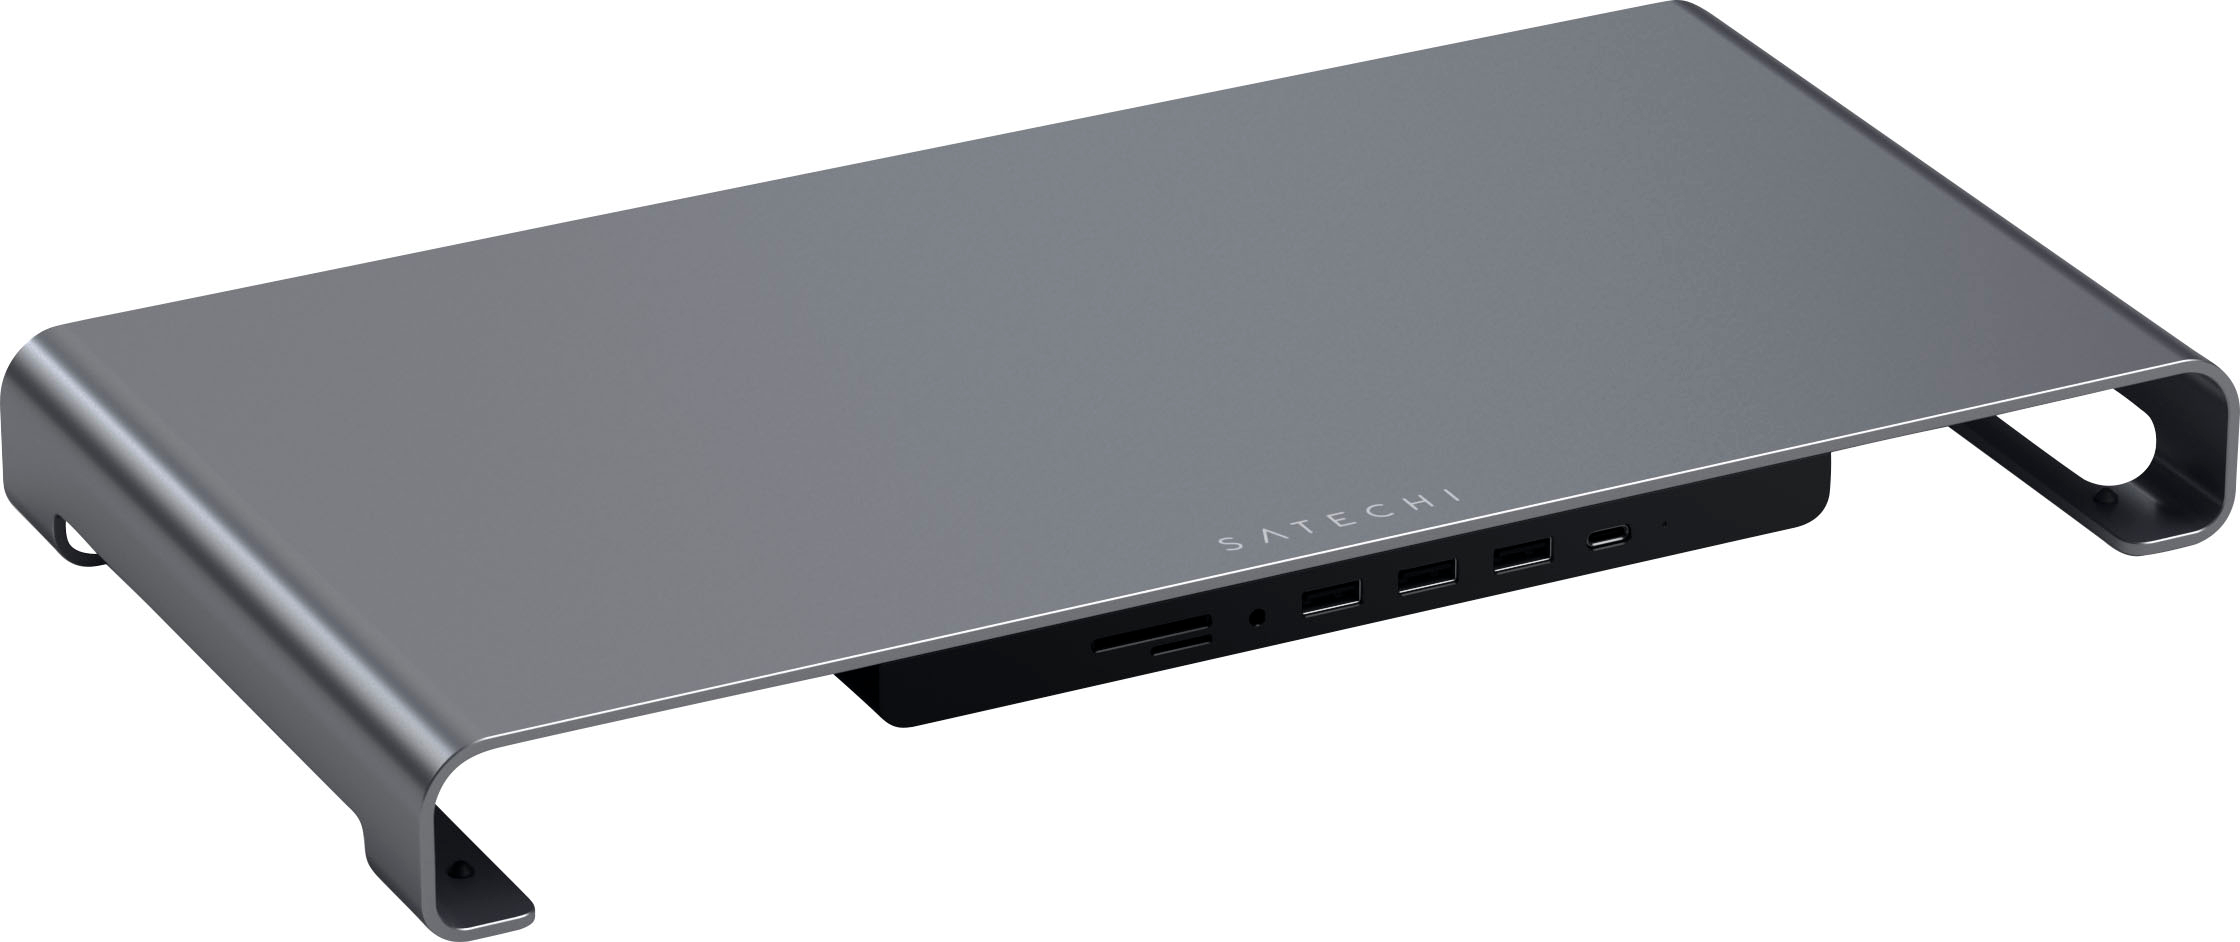 Angle View: Satechi - USB-C Monitor Stand Hub XL - Space Gray